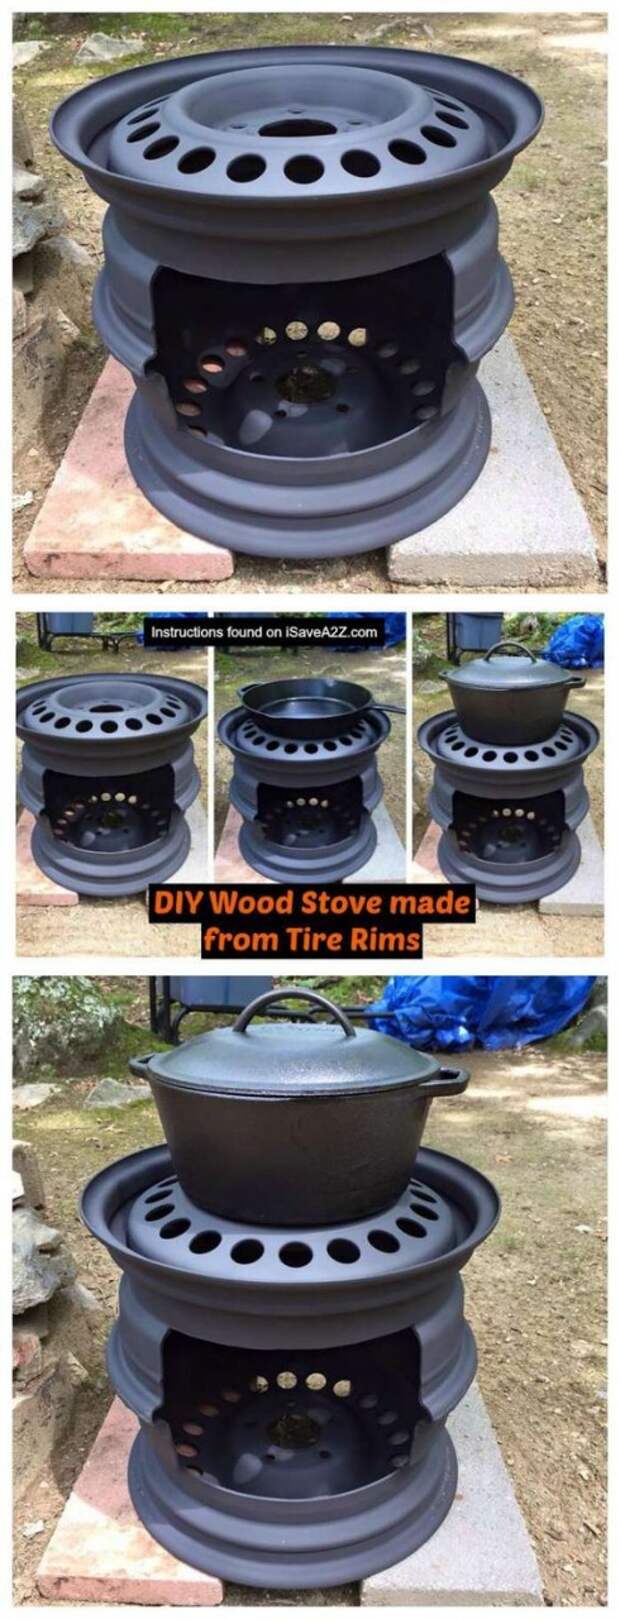 DIY Wood Stove made from Tire Rims - iSaveA2Z.com: 